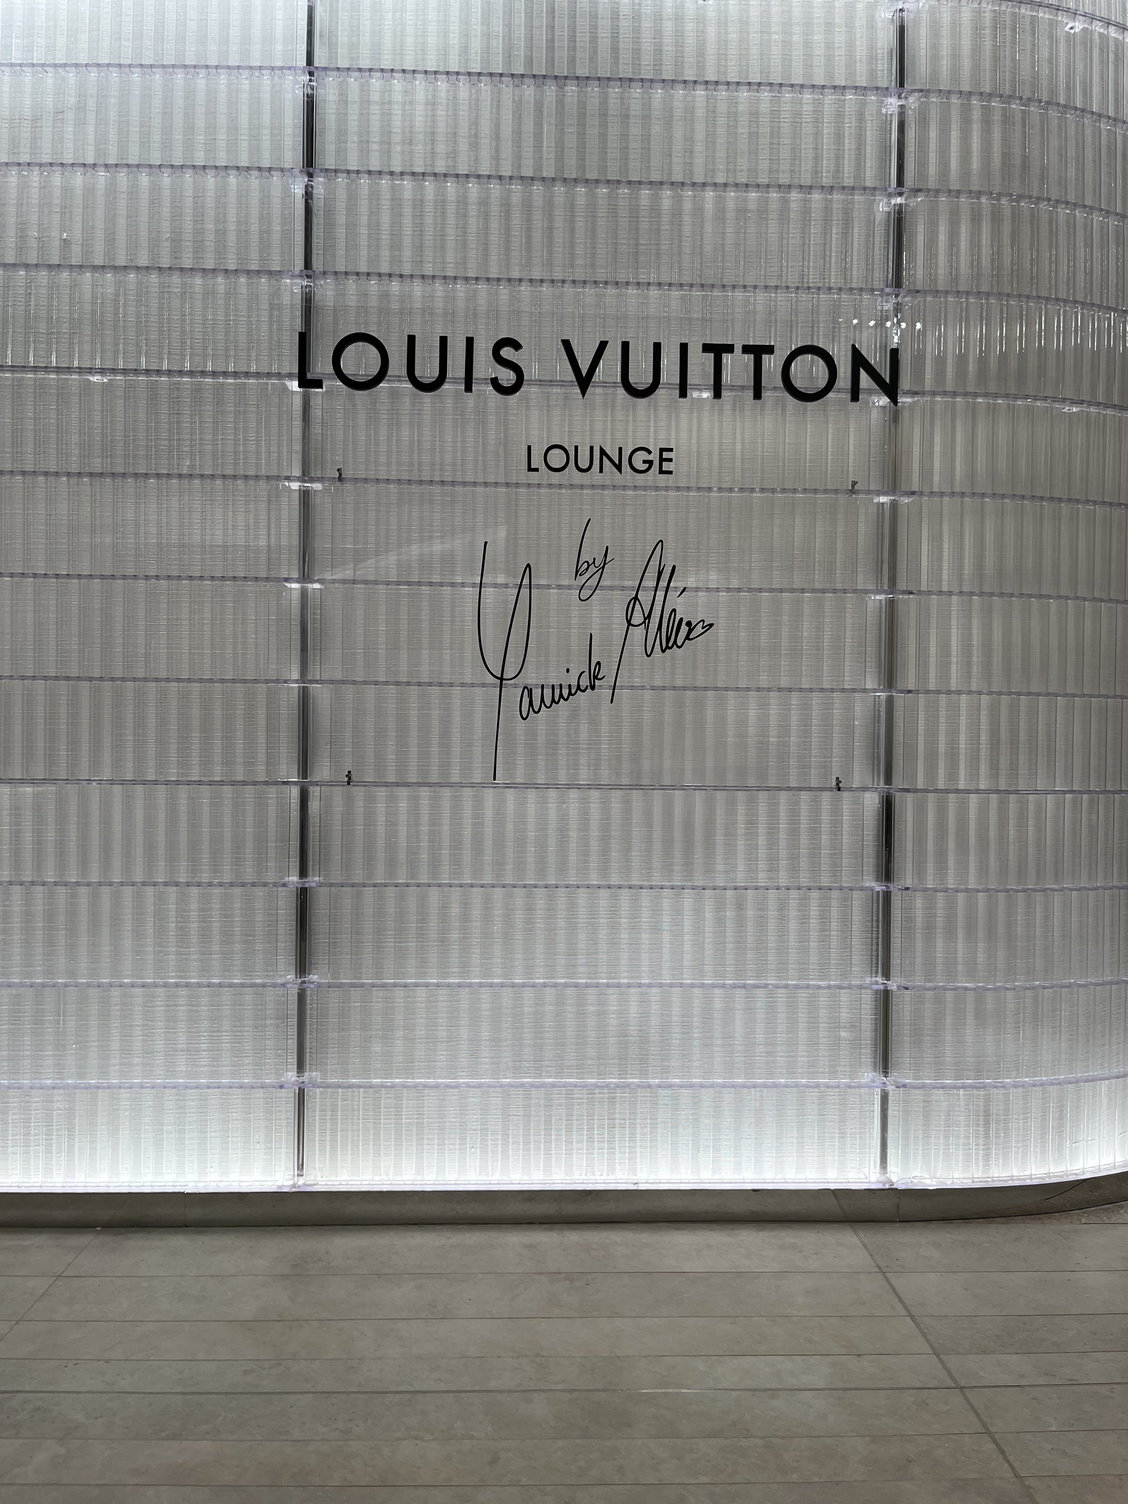 First Louis Vuitton Luxury Lounge opens in Qatar